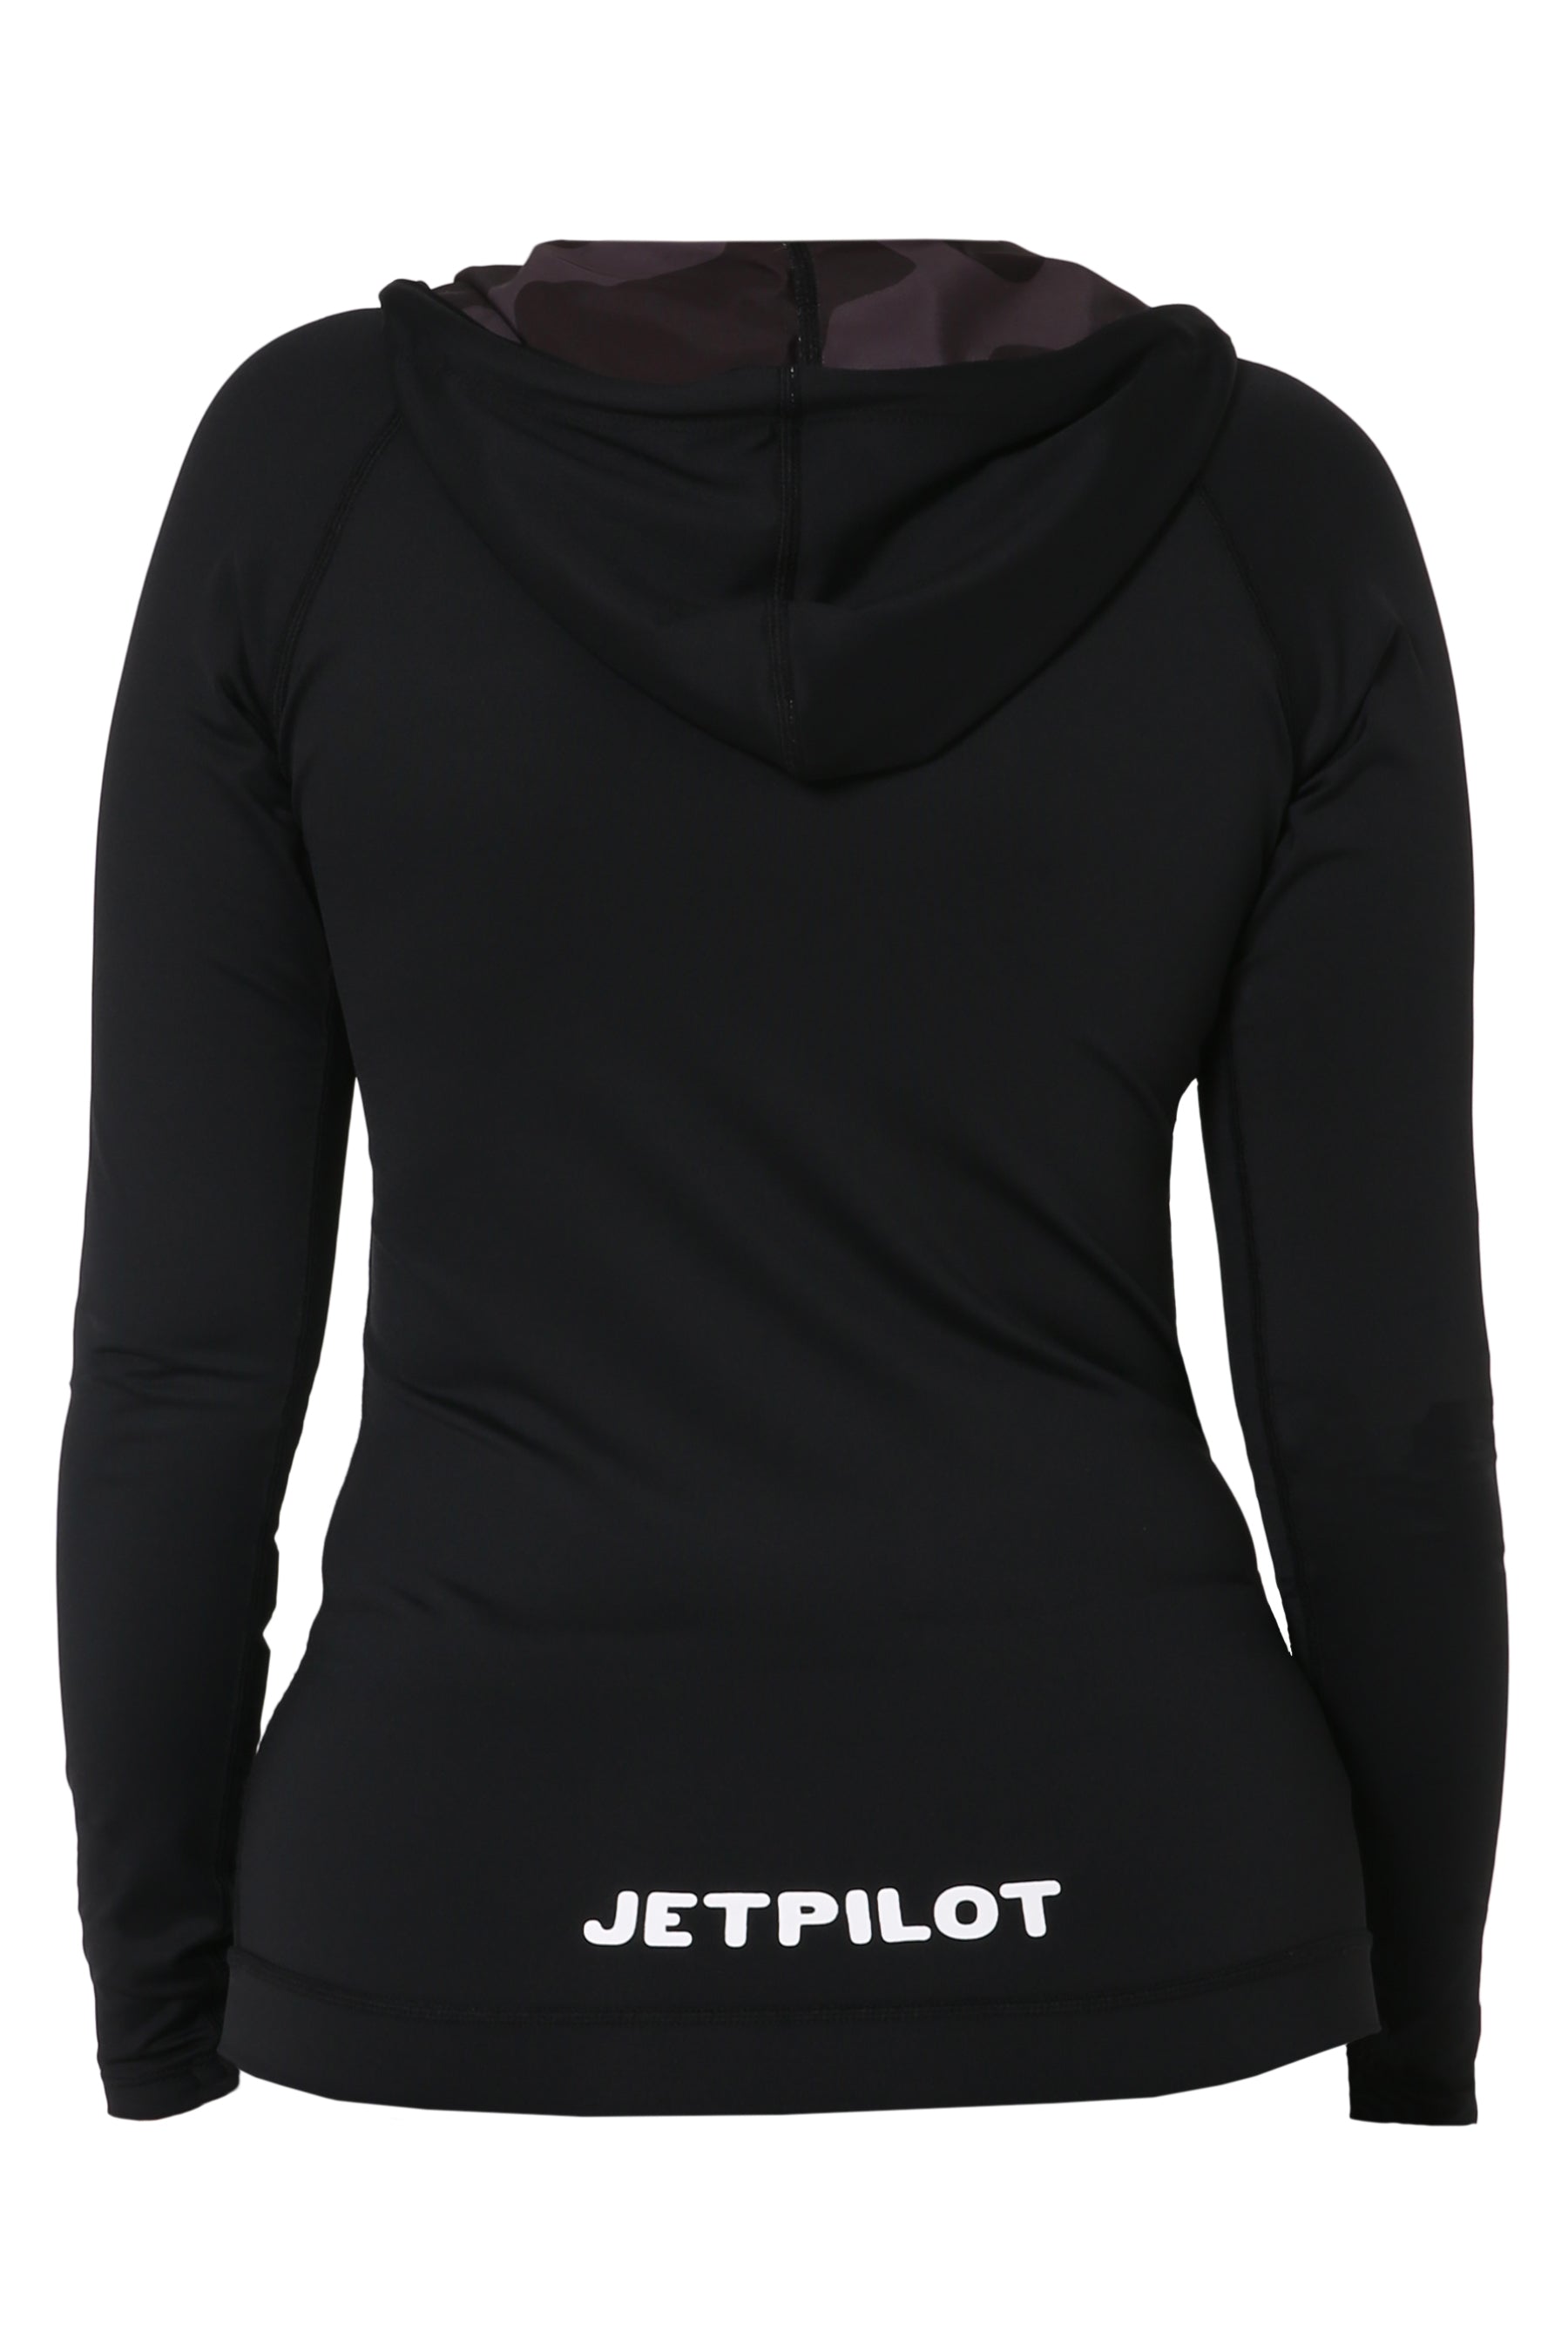 Jetpilot Zahra Ls Hooded Ladies Rashie - Black 4 